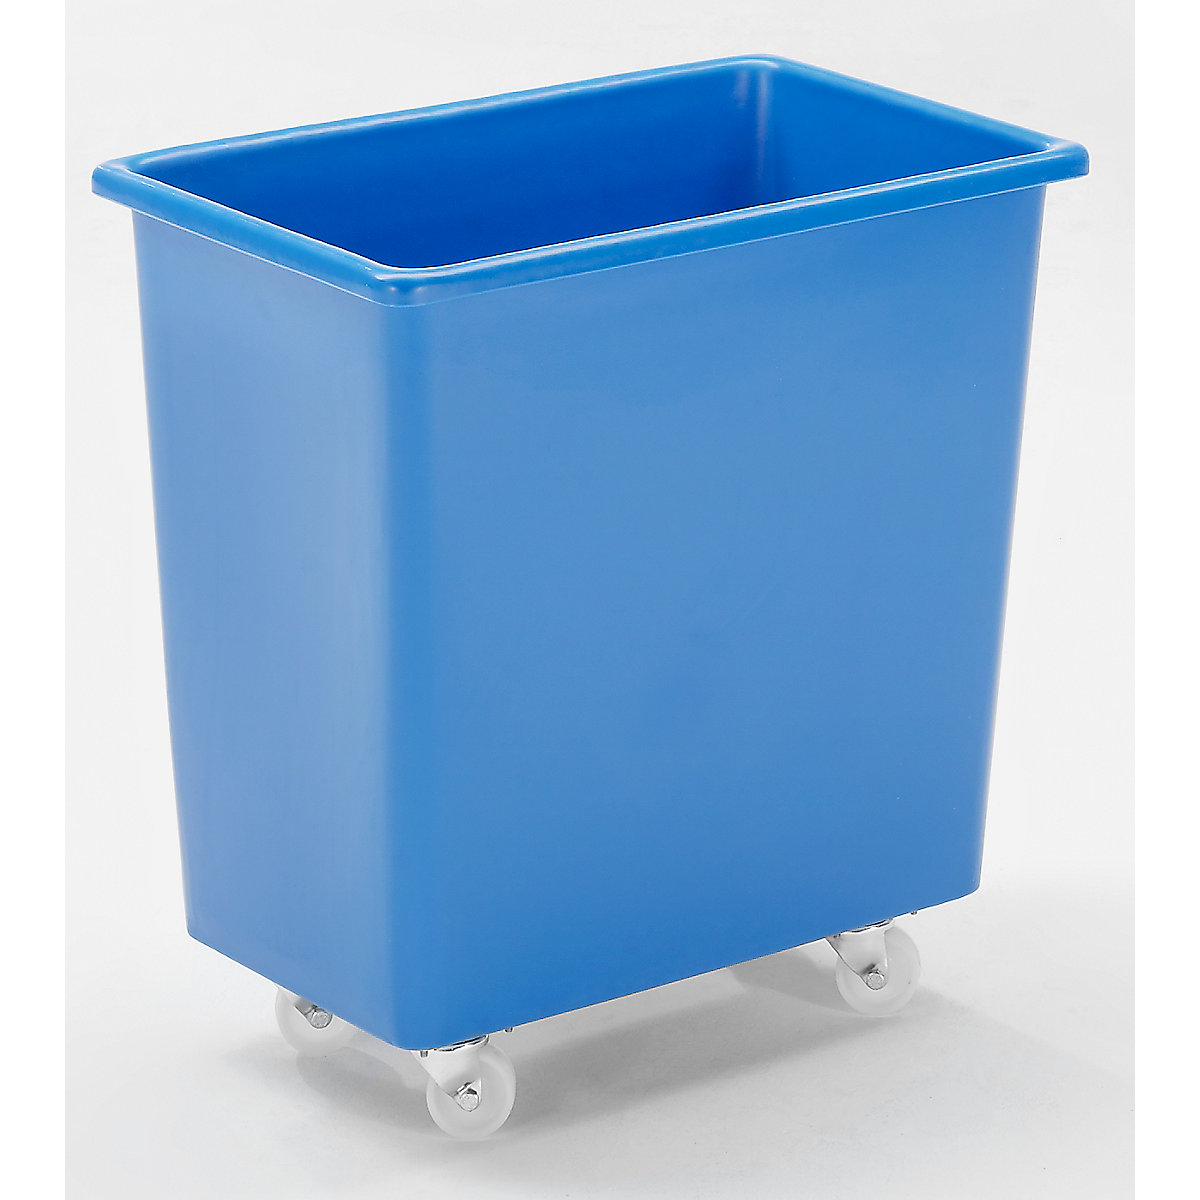 Rechteckbehälter aus Polyethylen, fahrbar, Inhalt 135 l, blau, ab 5 Stk